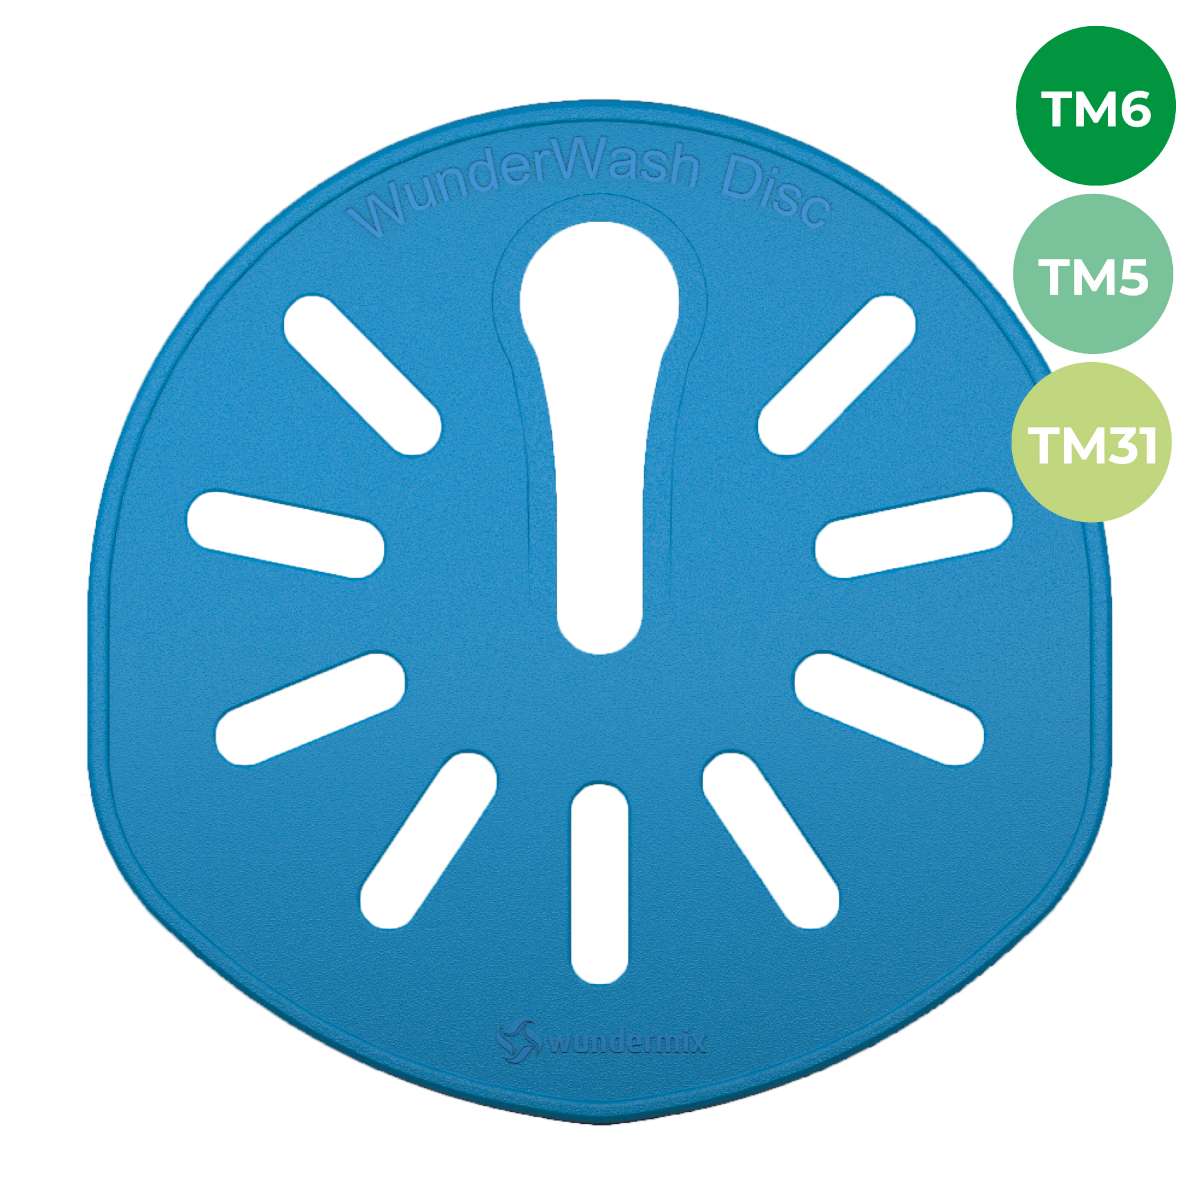 Cuchillas TM6 - Thermomix Argentina